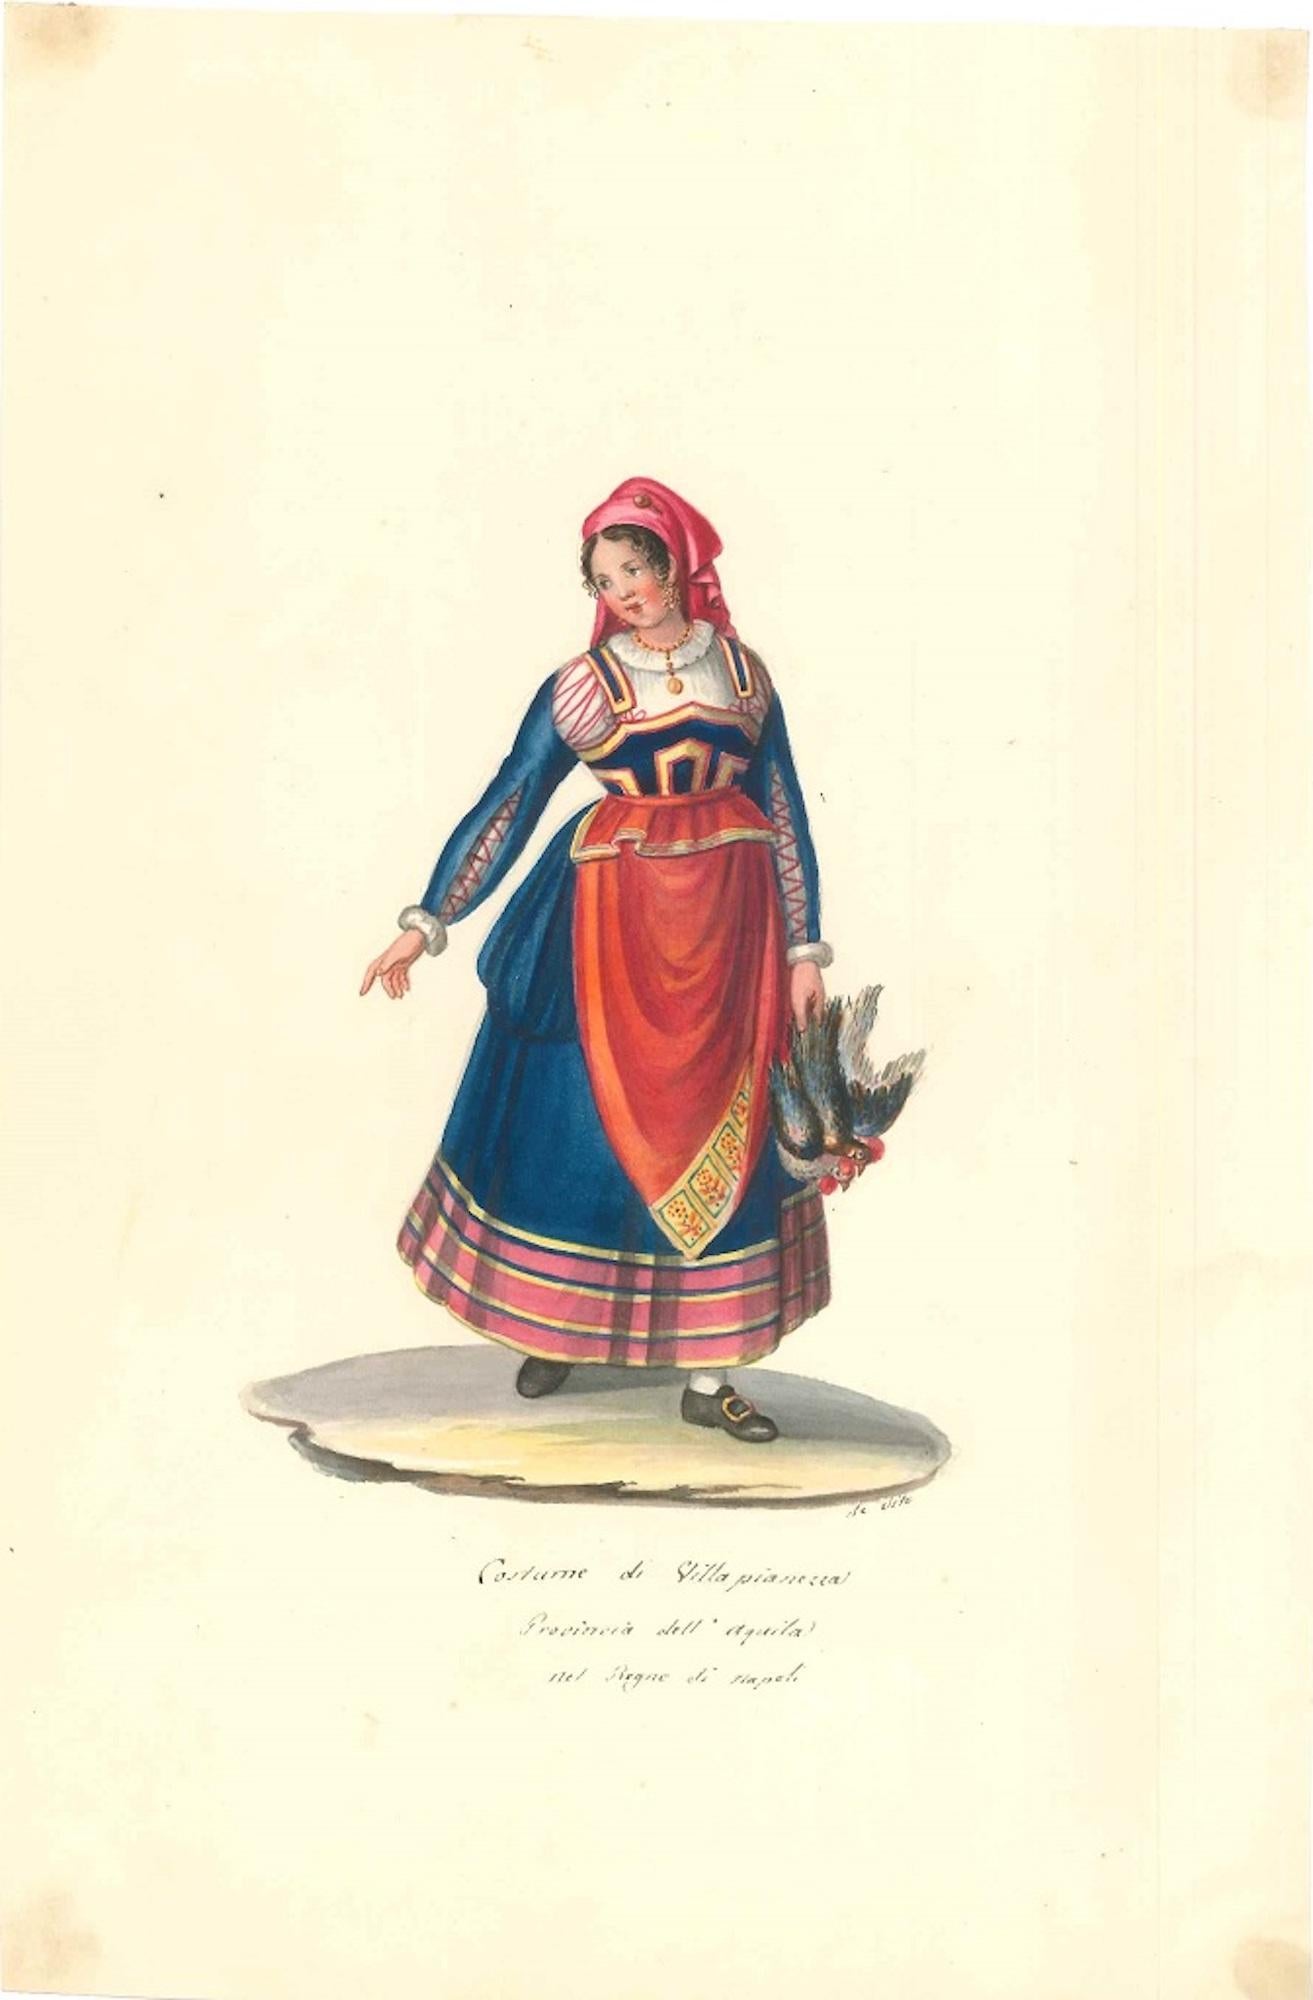 Kostüm di Villa Pianezza - Aquarell von M. De Vito - 1820 ca.